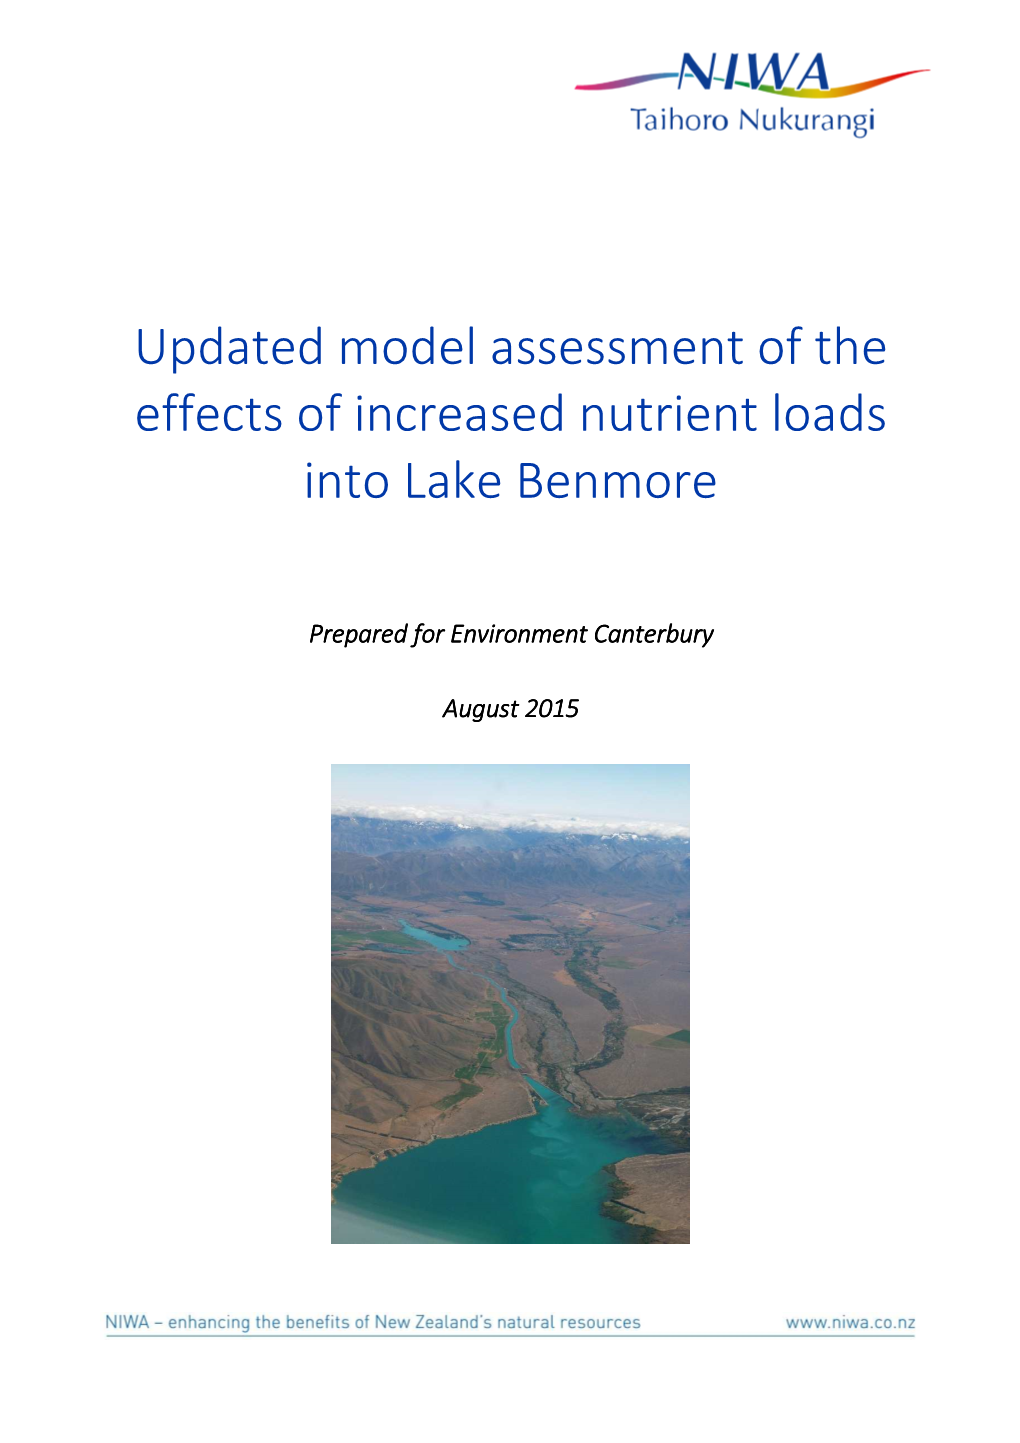 NIWA Lake Benmore Model Assessment Nutrient Load Effects